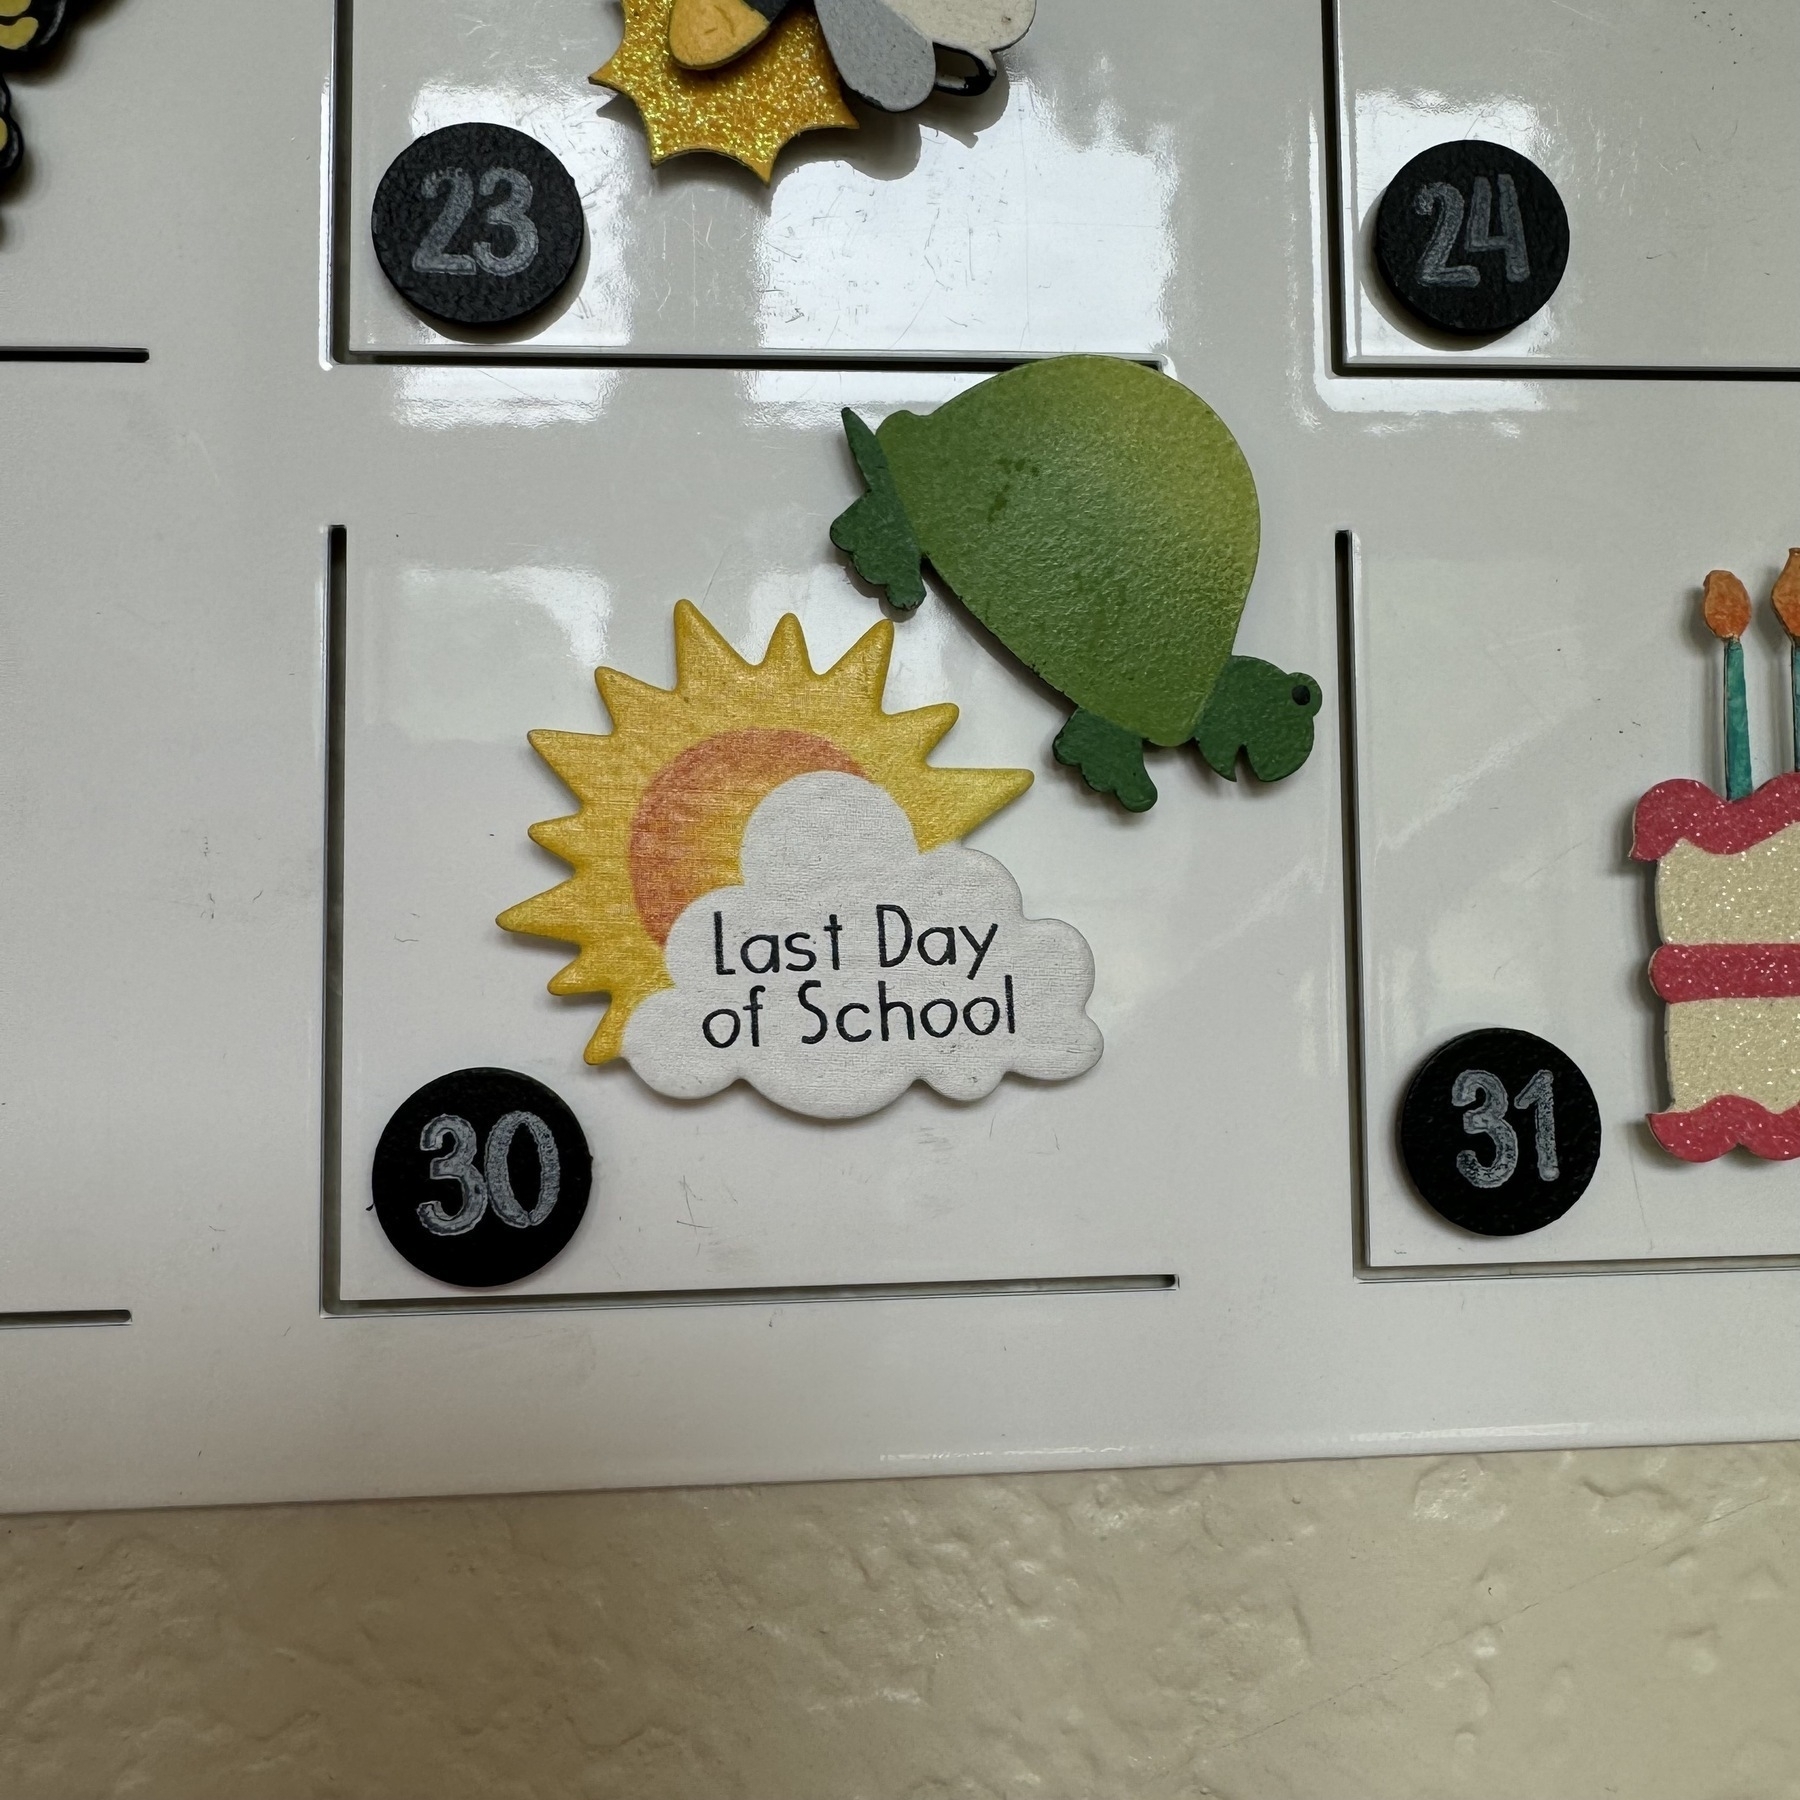 Last day of school magnet on calendar